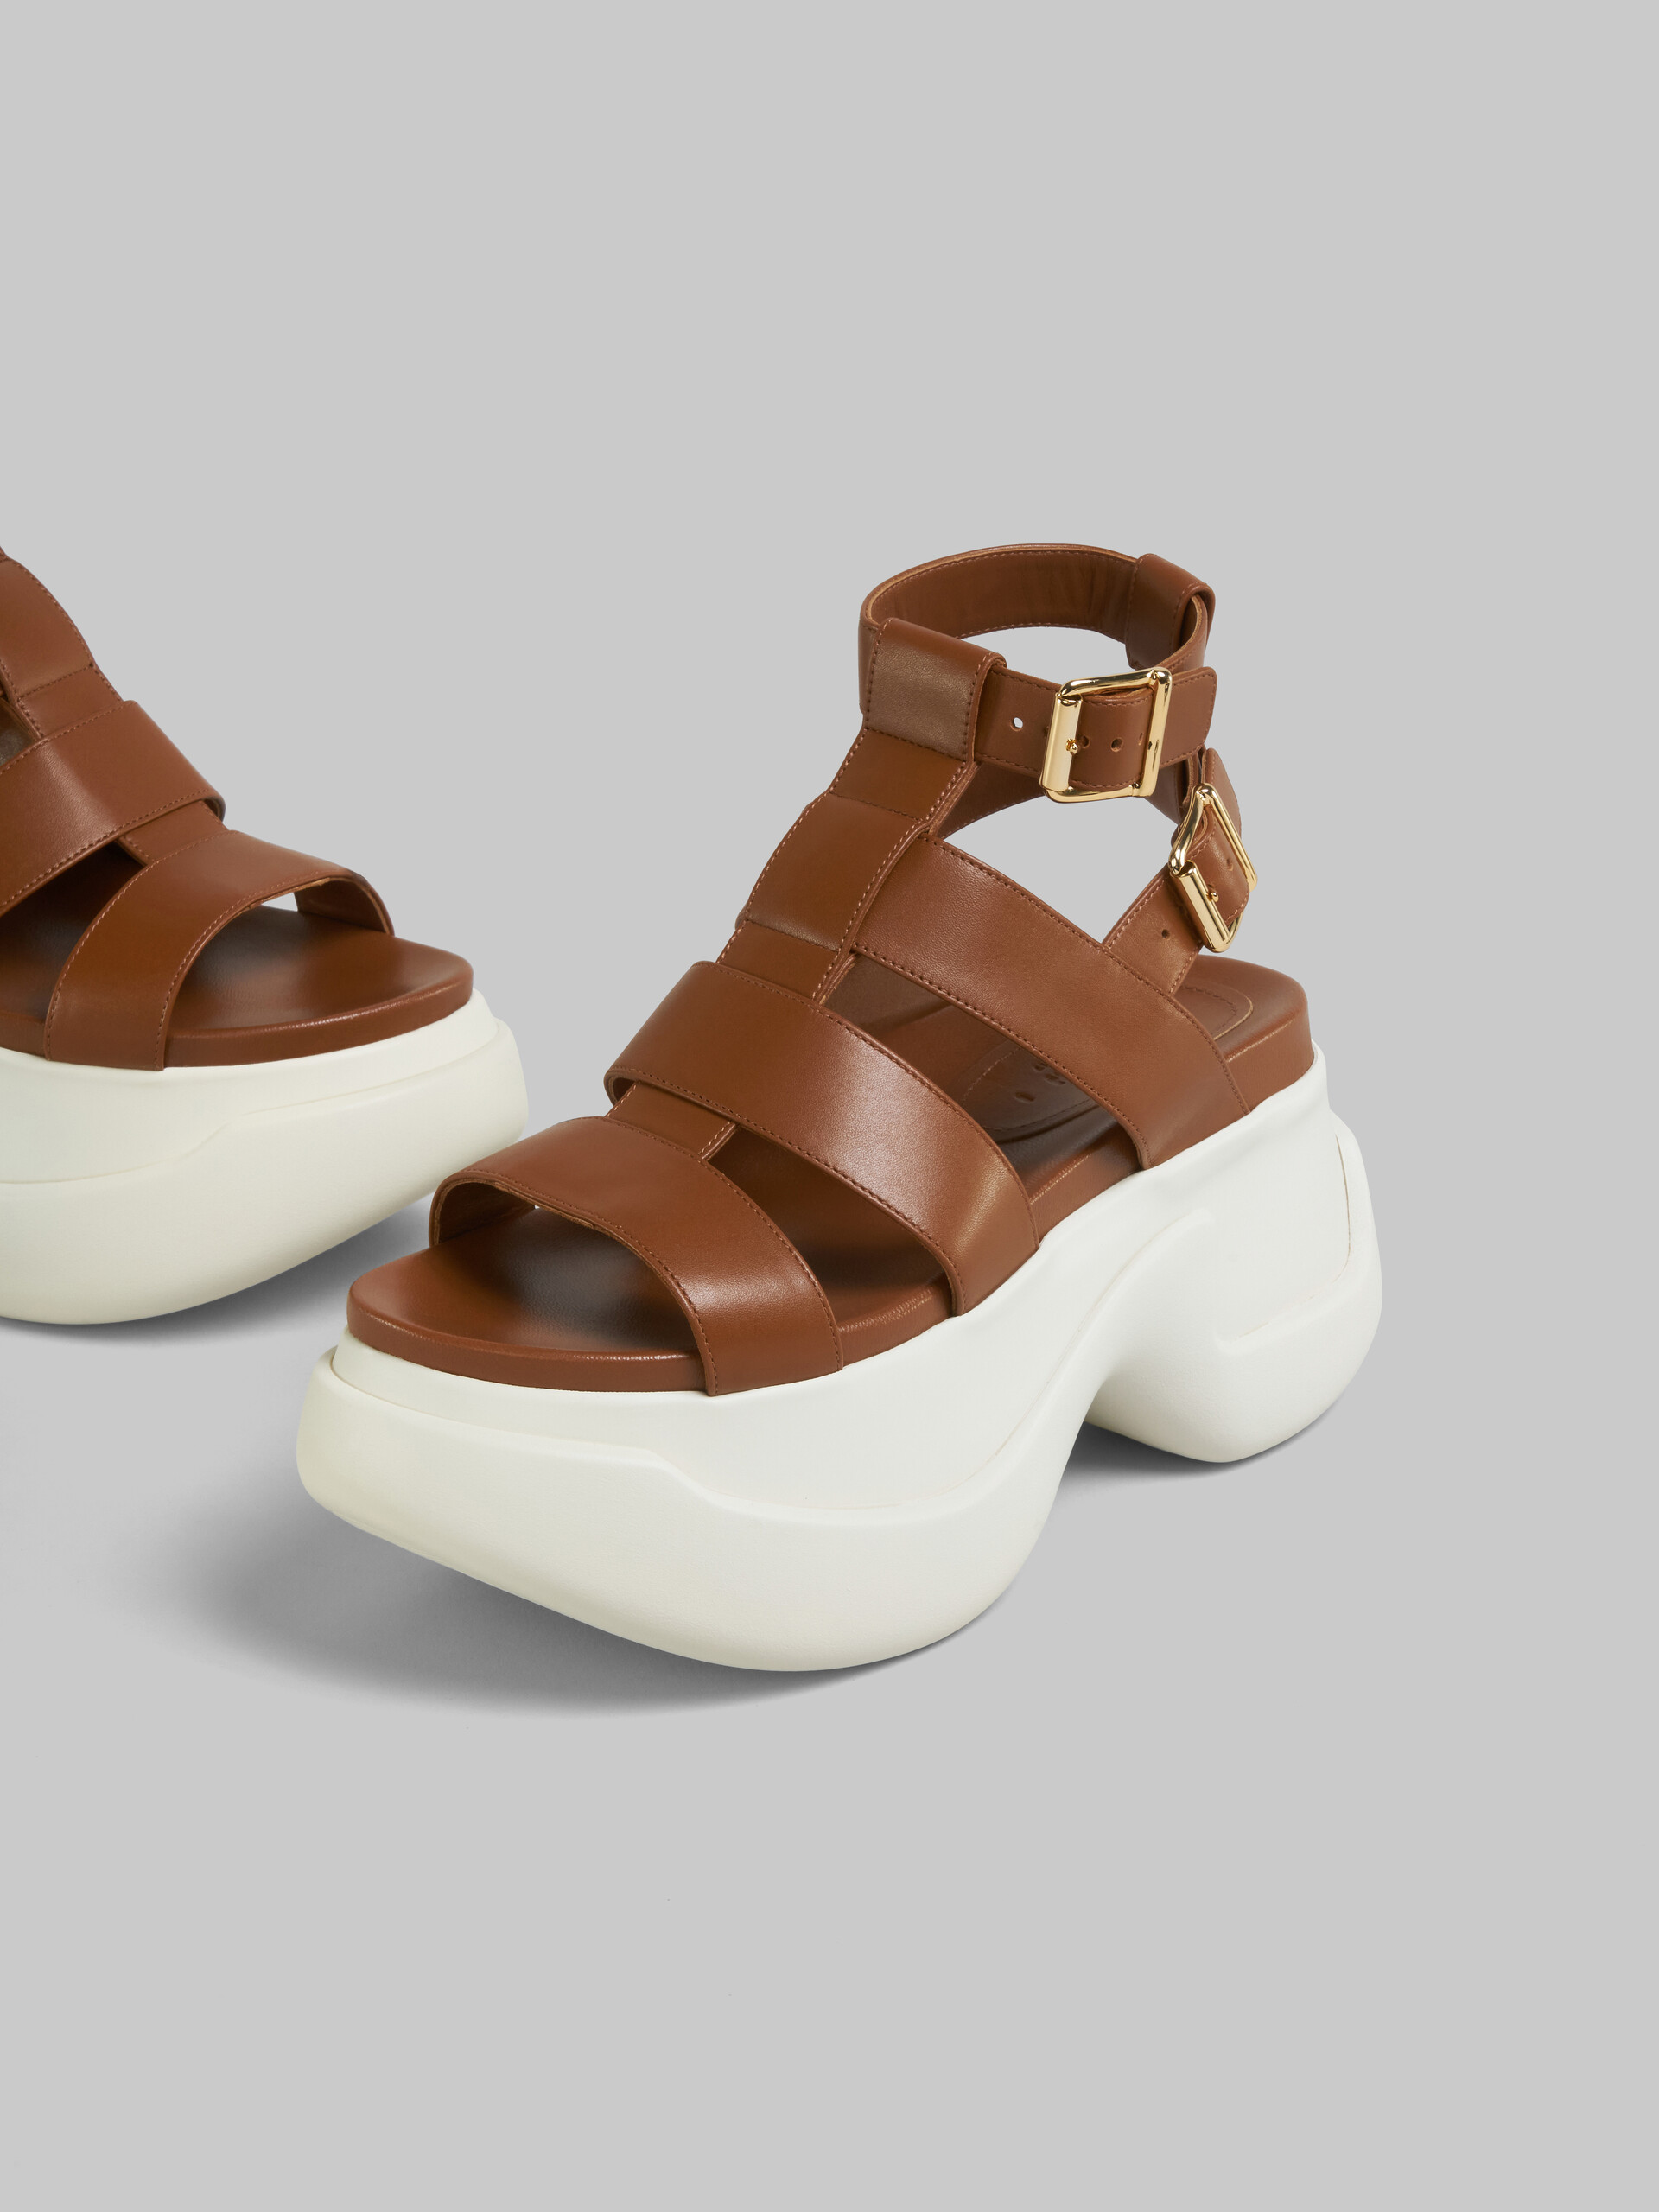 Brown leather Aras 23 gladiator sandal - Sandals - Image 5